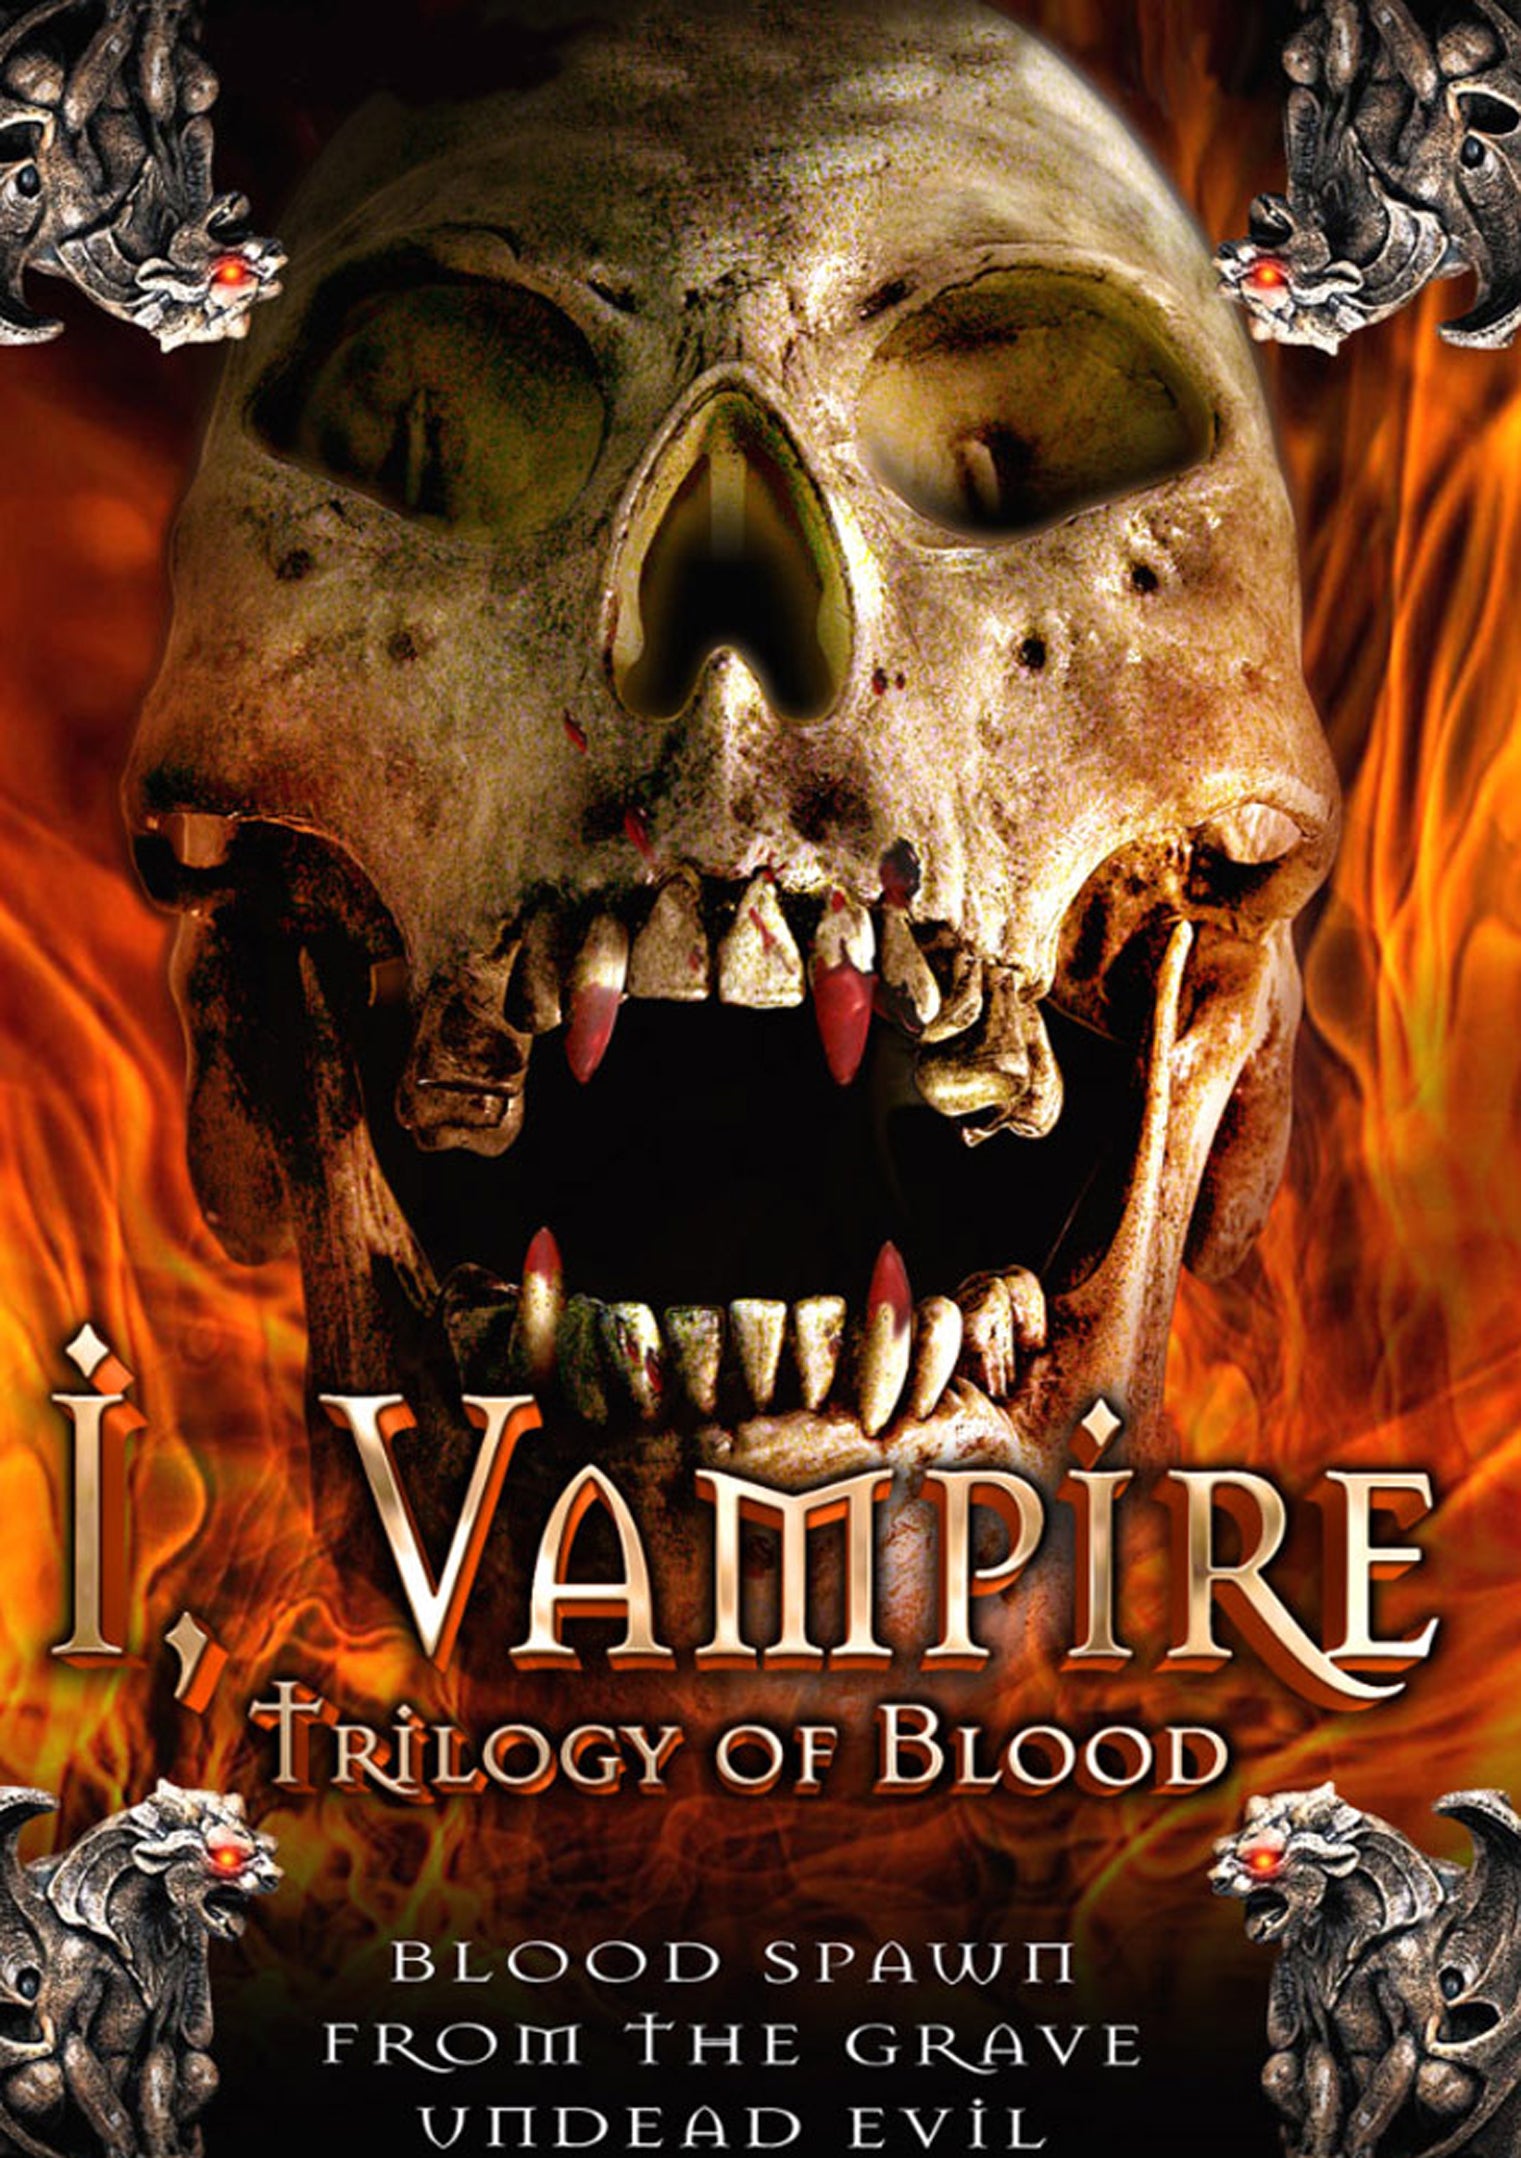 I, VAMPIRE: TRILOGY OF BLOOD DVD